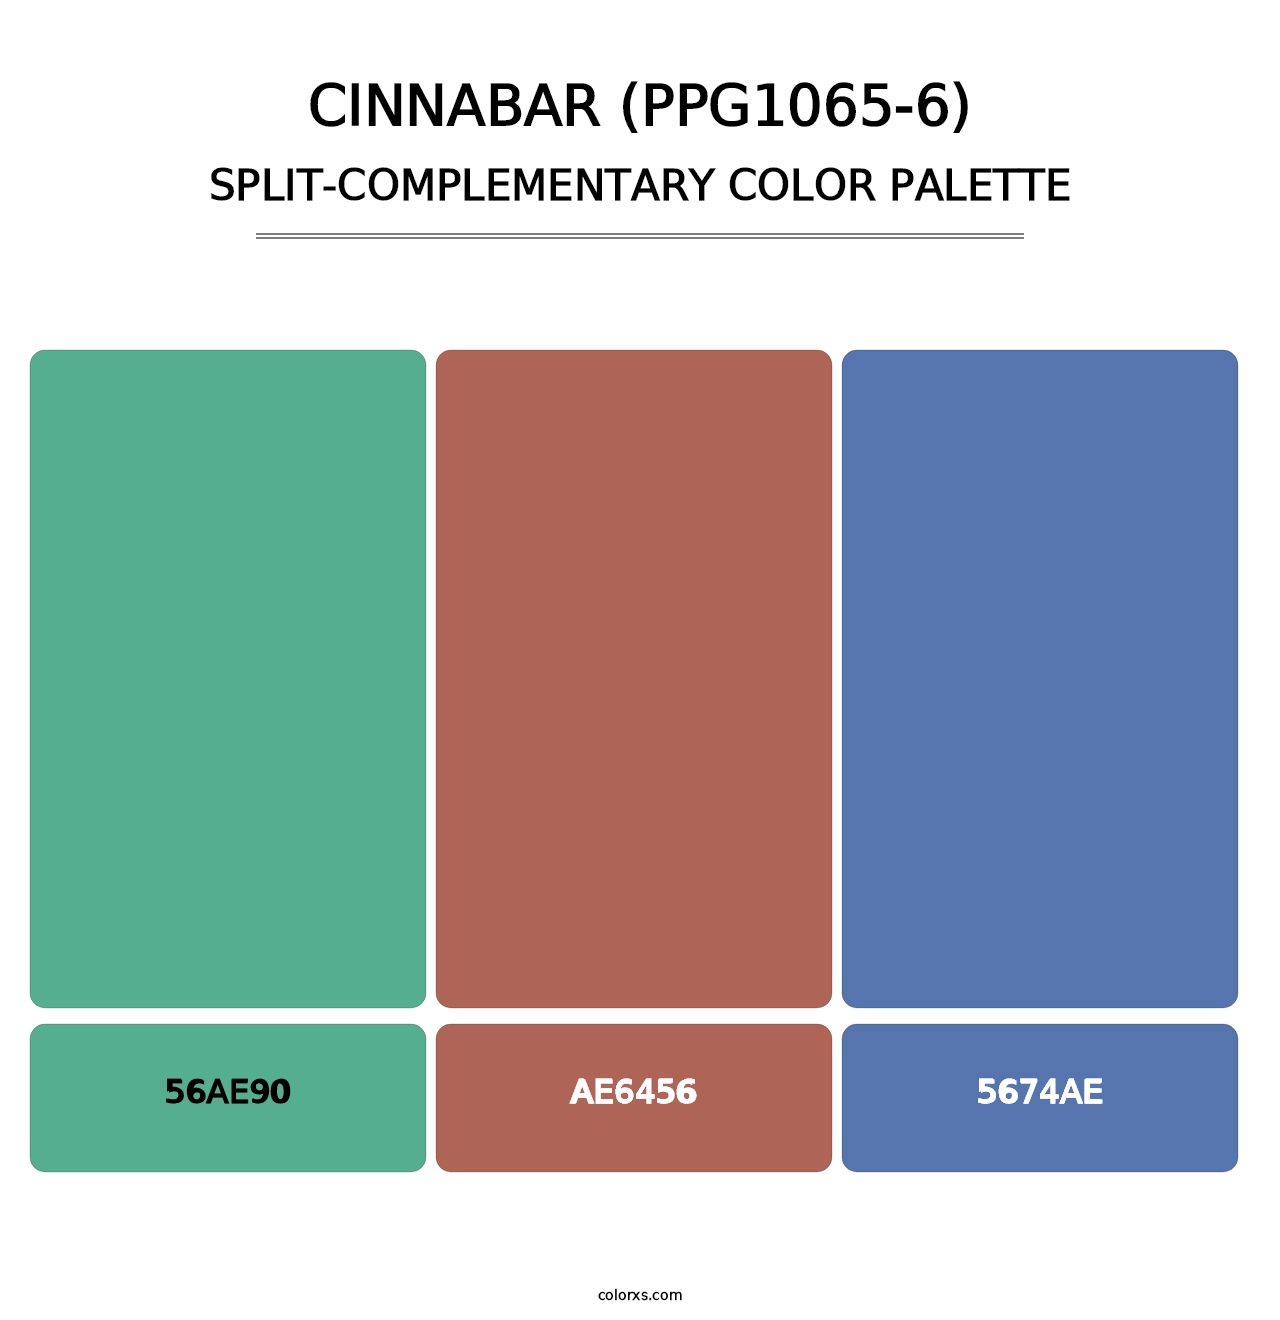 Cinnabar (PPG1065-6) - Split-Complementary Color Palette